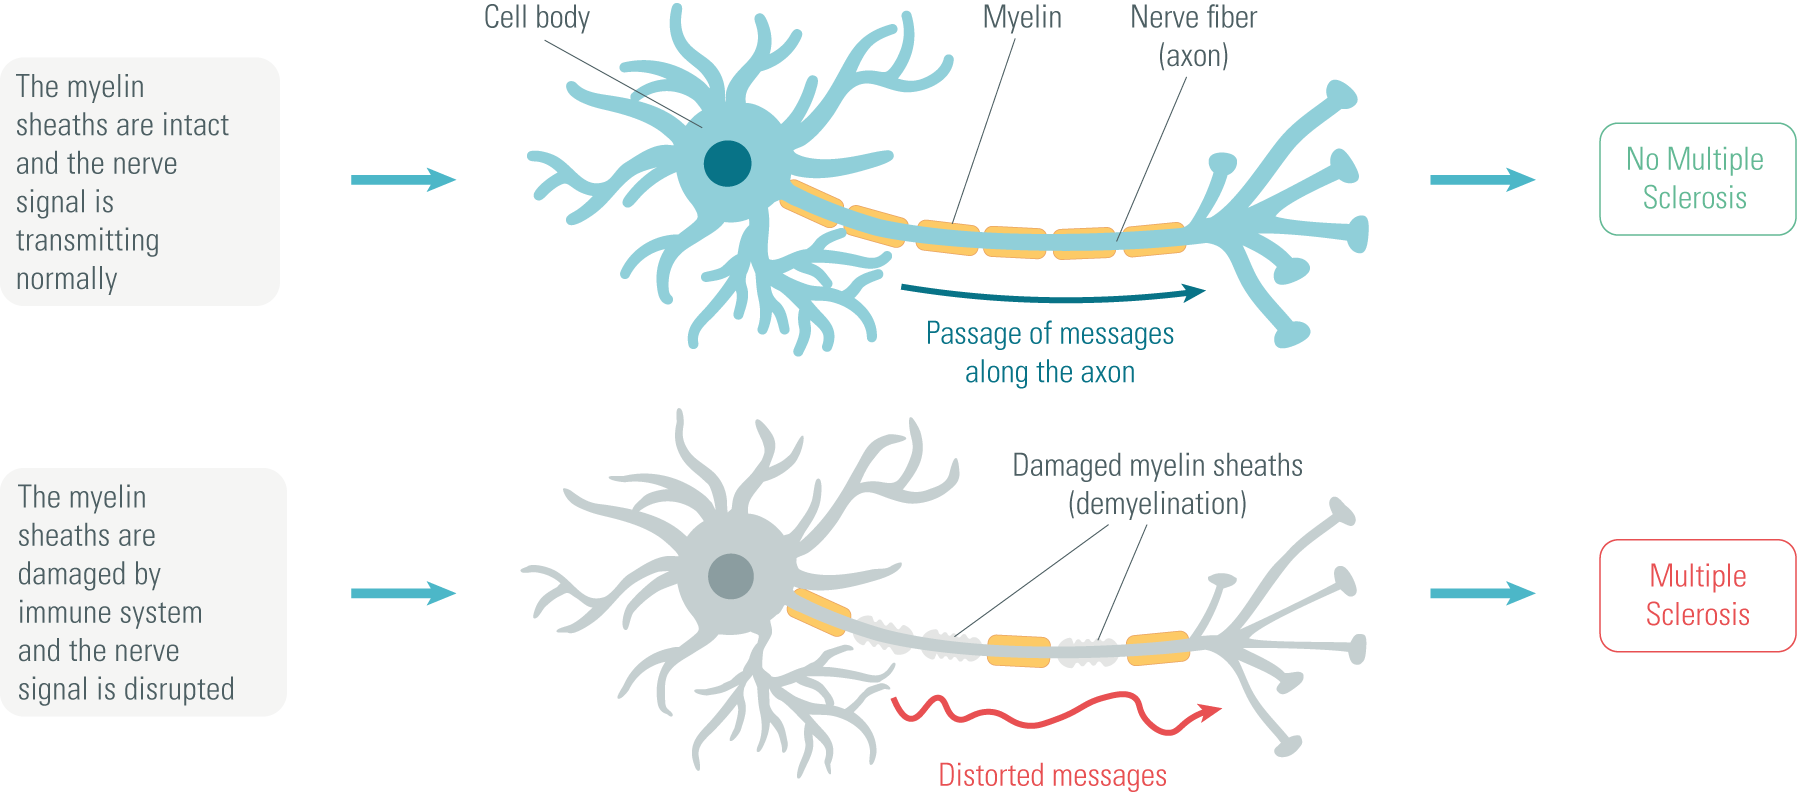 multibple-sclerosis-neurons